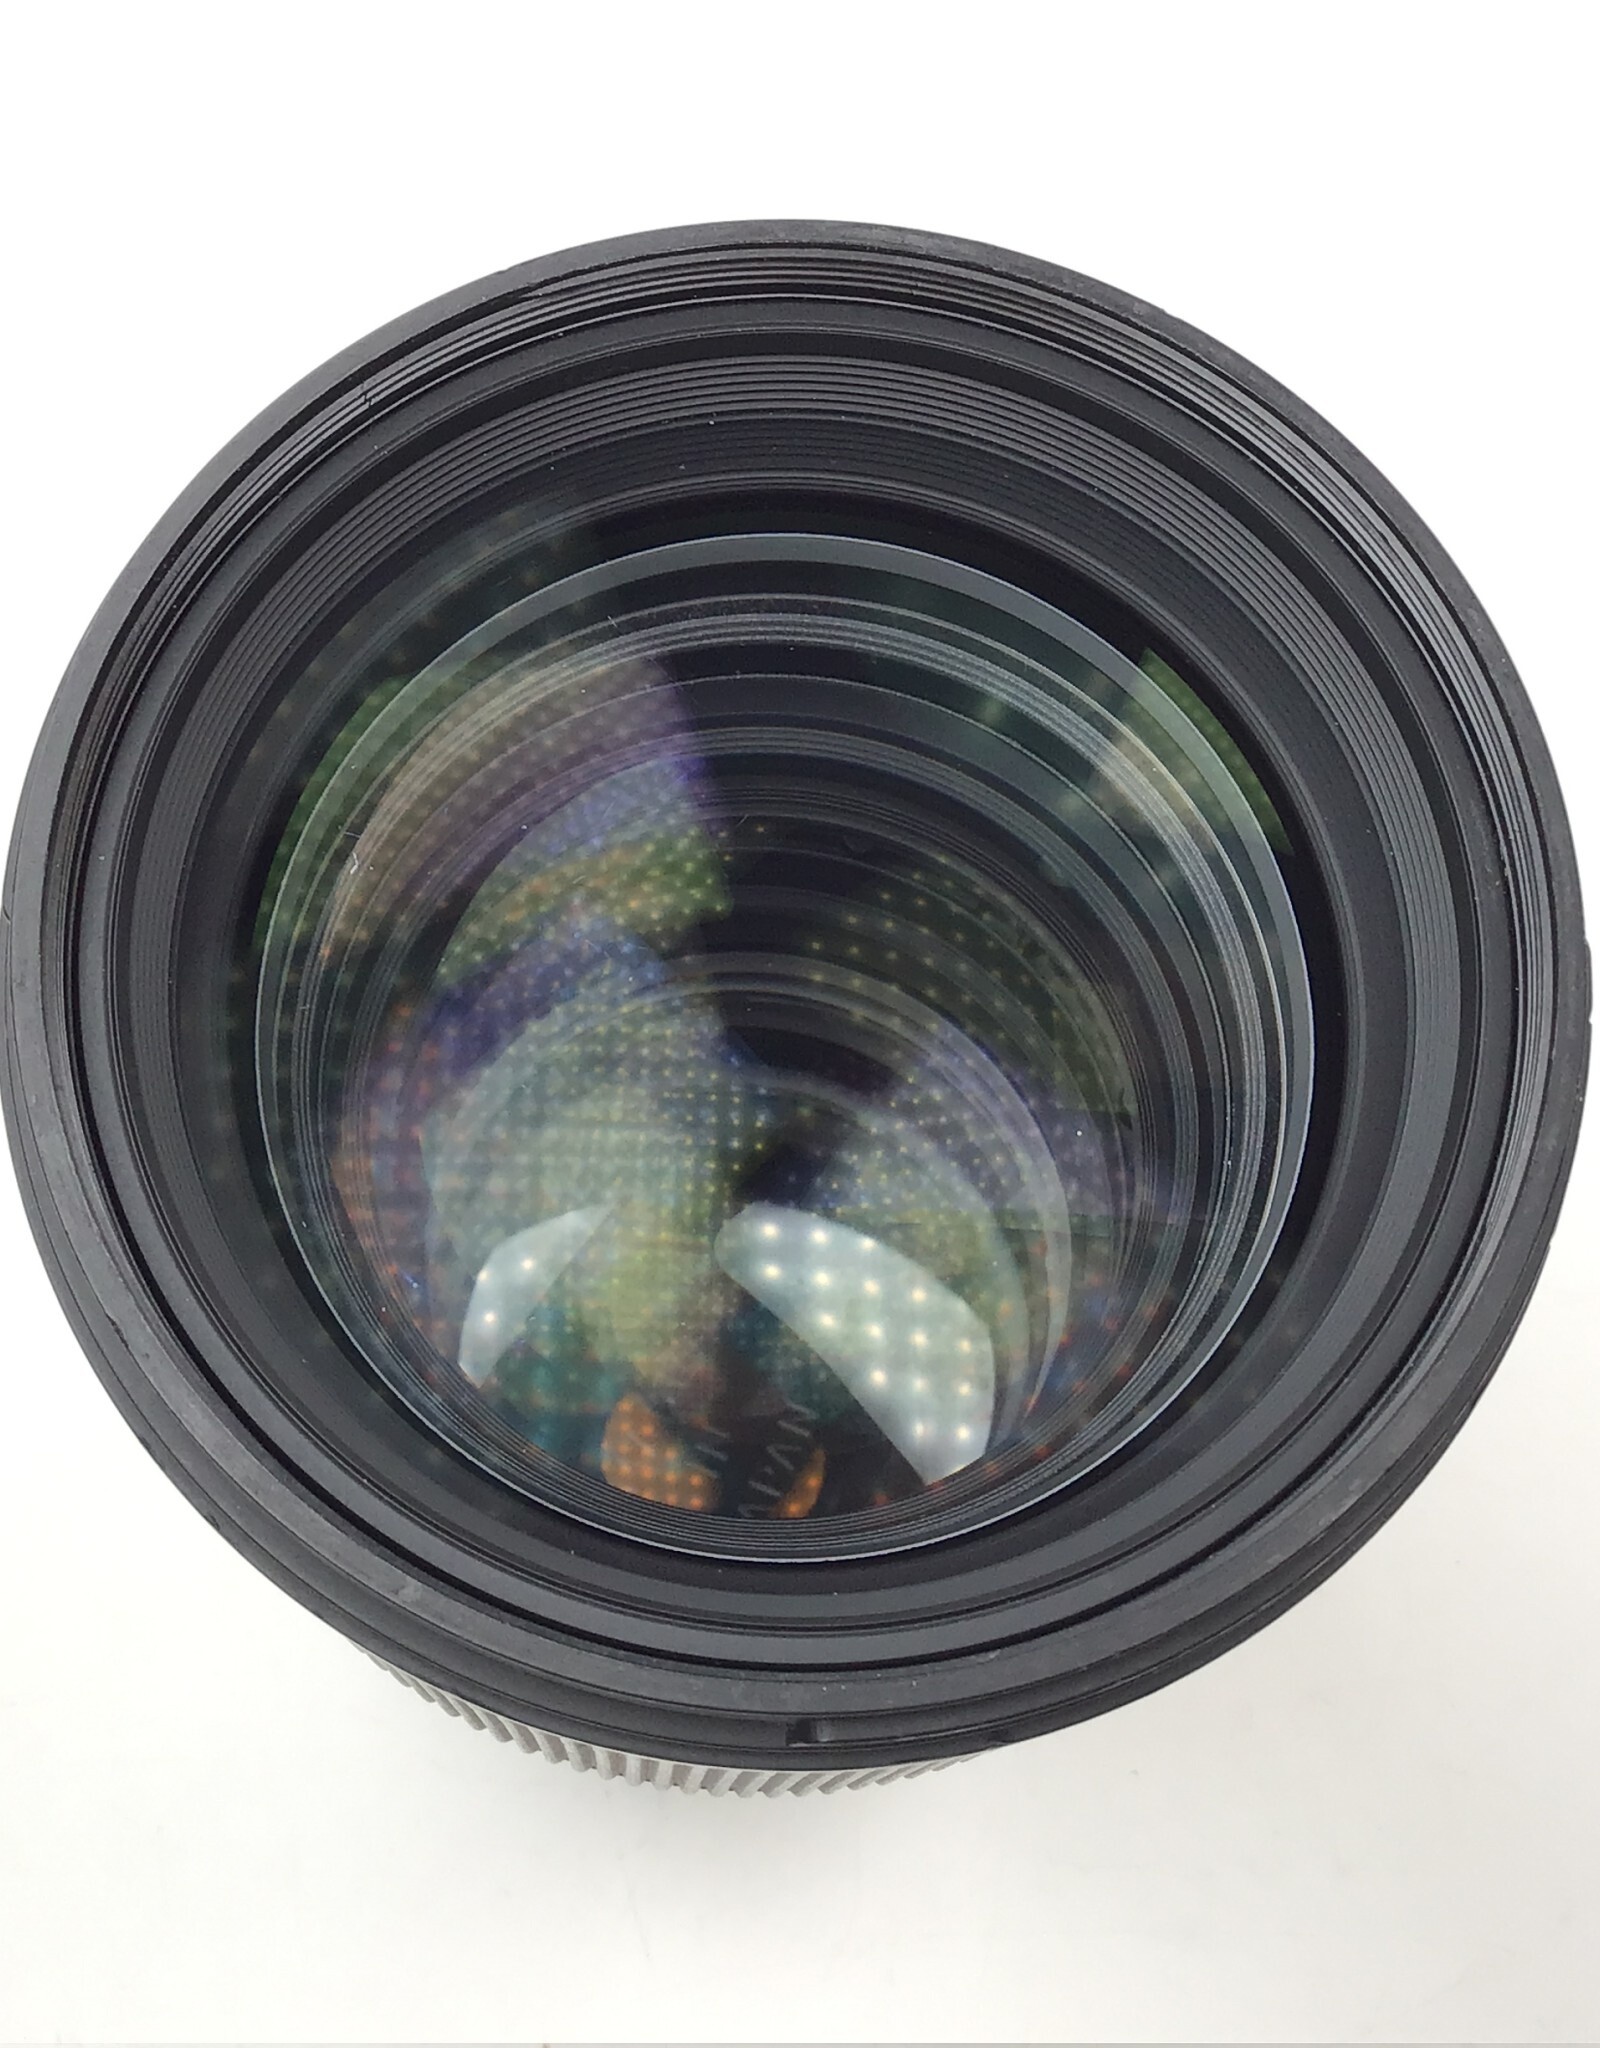 NIKON Sigma Art 85mm f1.4 DG Lens for Nikon Used Fair